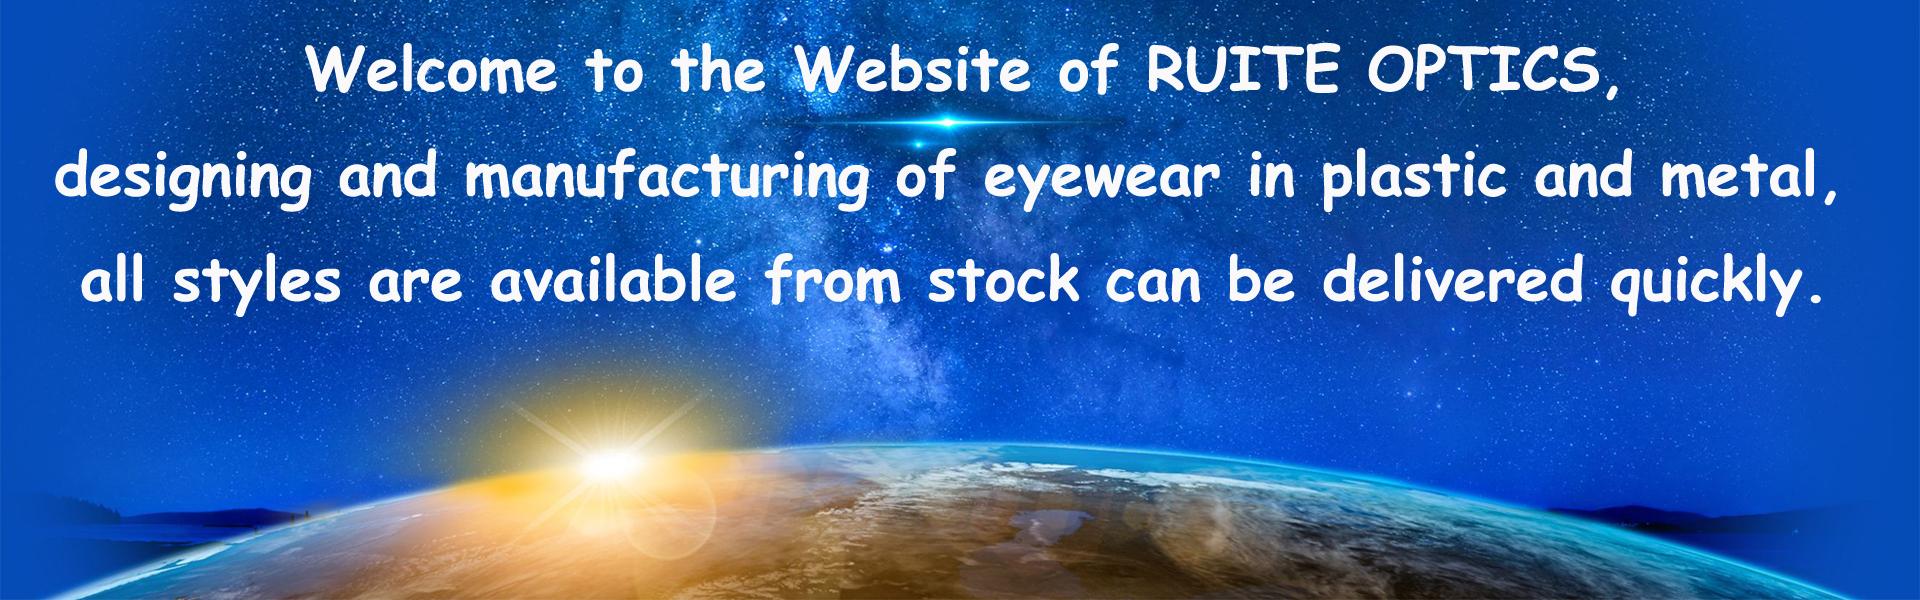 eyewear stoc réidh, eyewear, spéaclaí stoic réidh,Wenzhou Ruite Optics Co.,Ltd